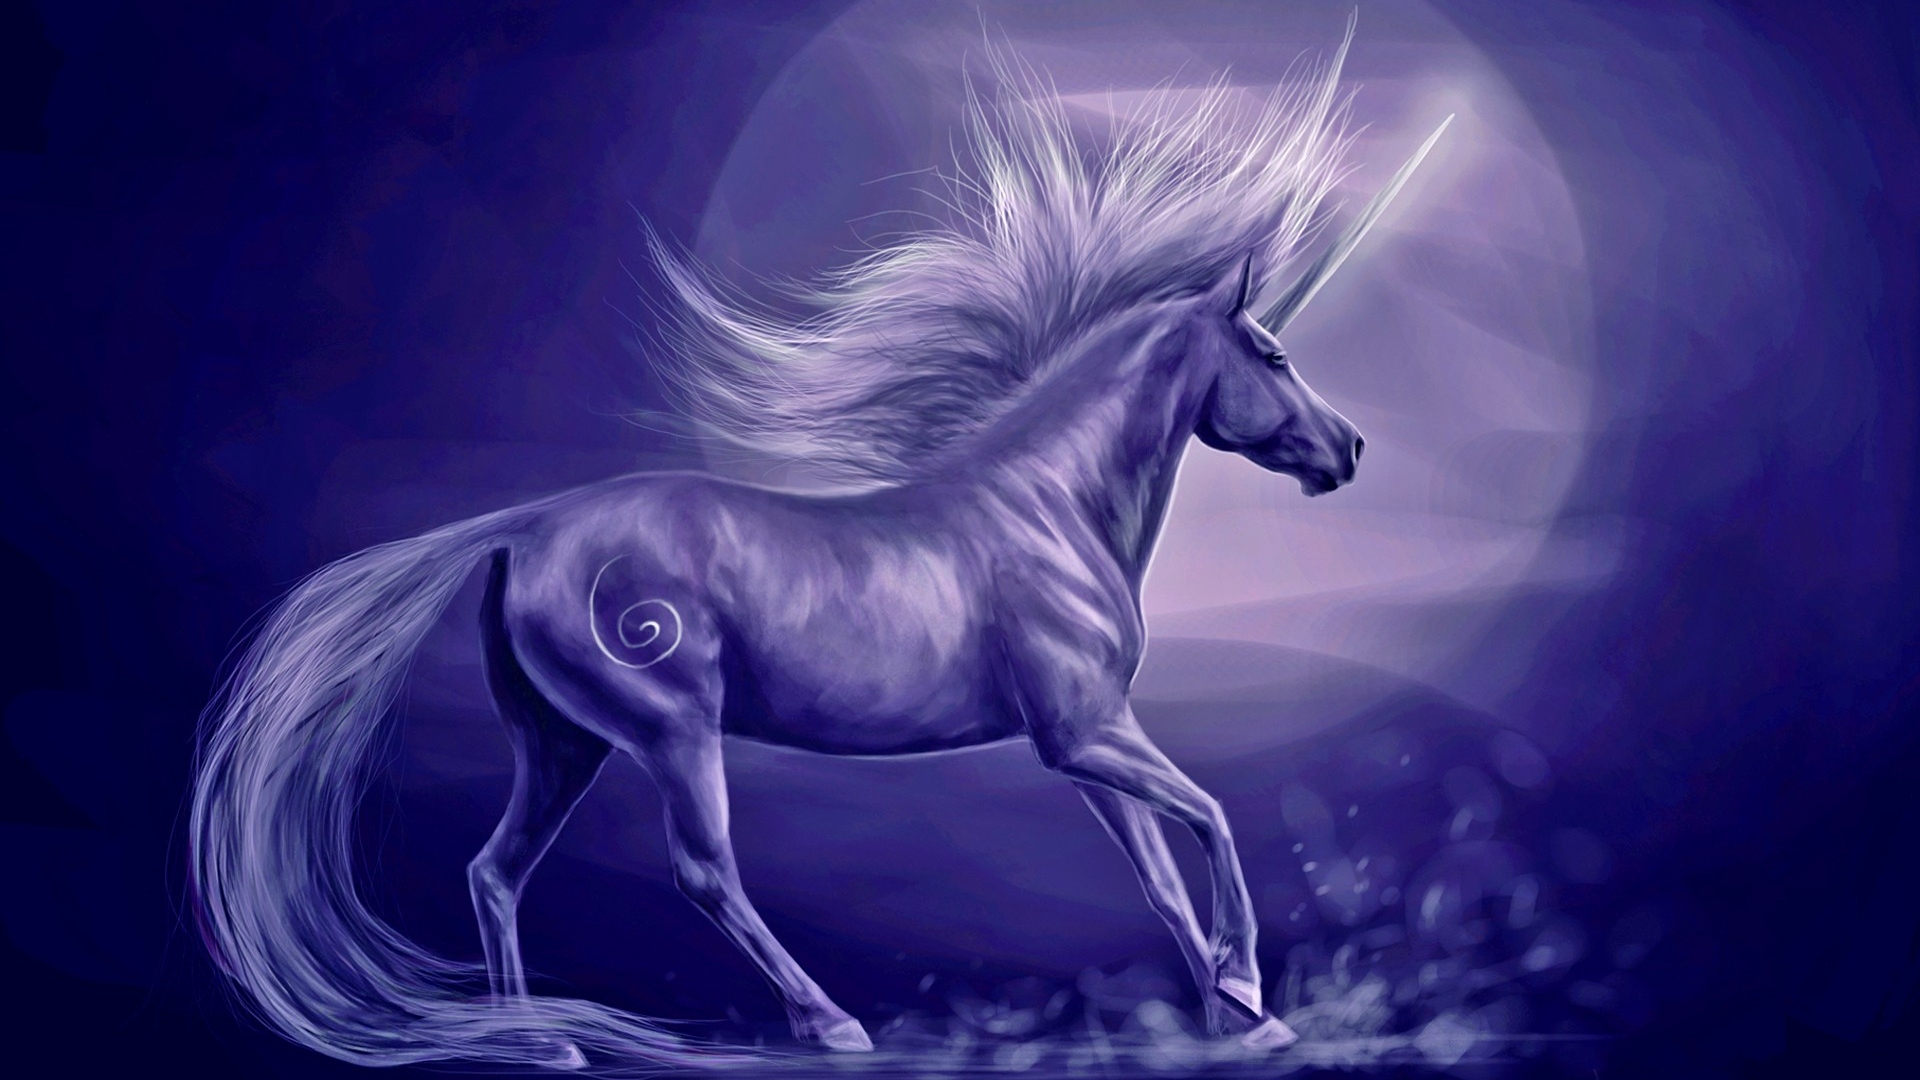 fondos de pantalla de unicornio hd,caballo,personaje de ficción,cielo,melena,criatura mítica